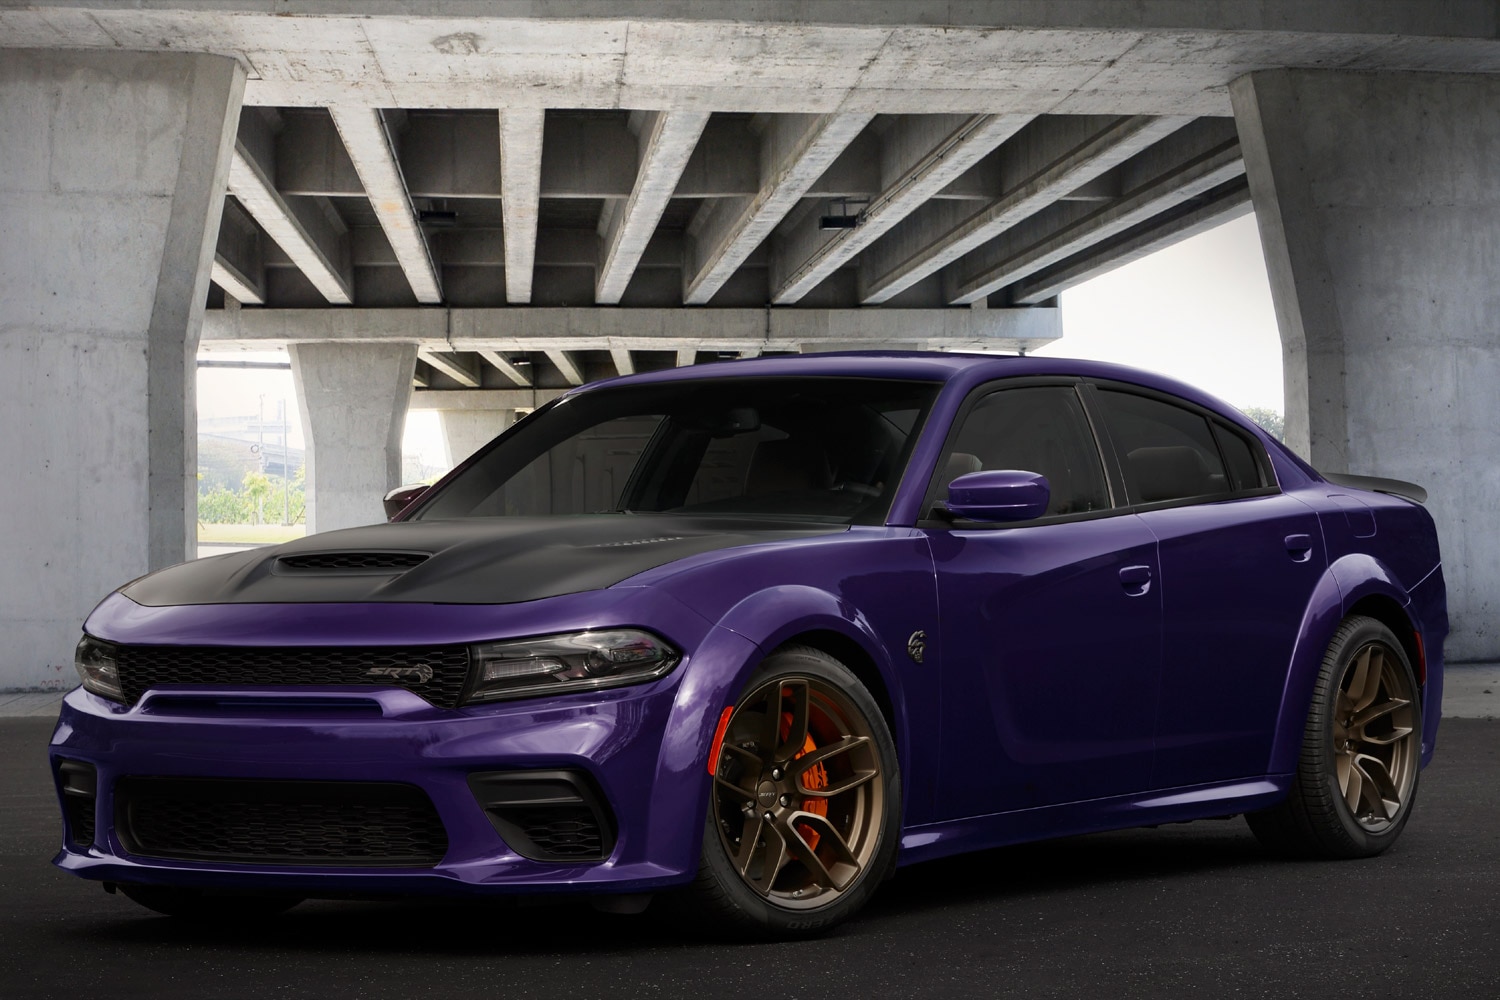 2022 Dodge Charger SRT Jailbreak in purple parked under an overpass